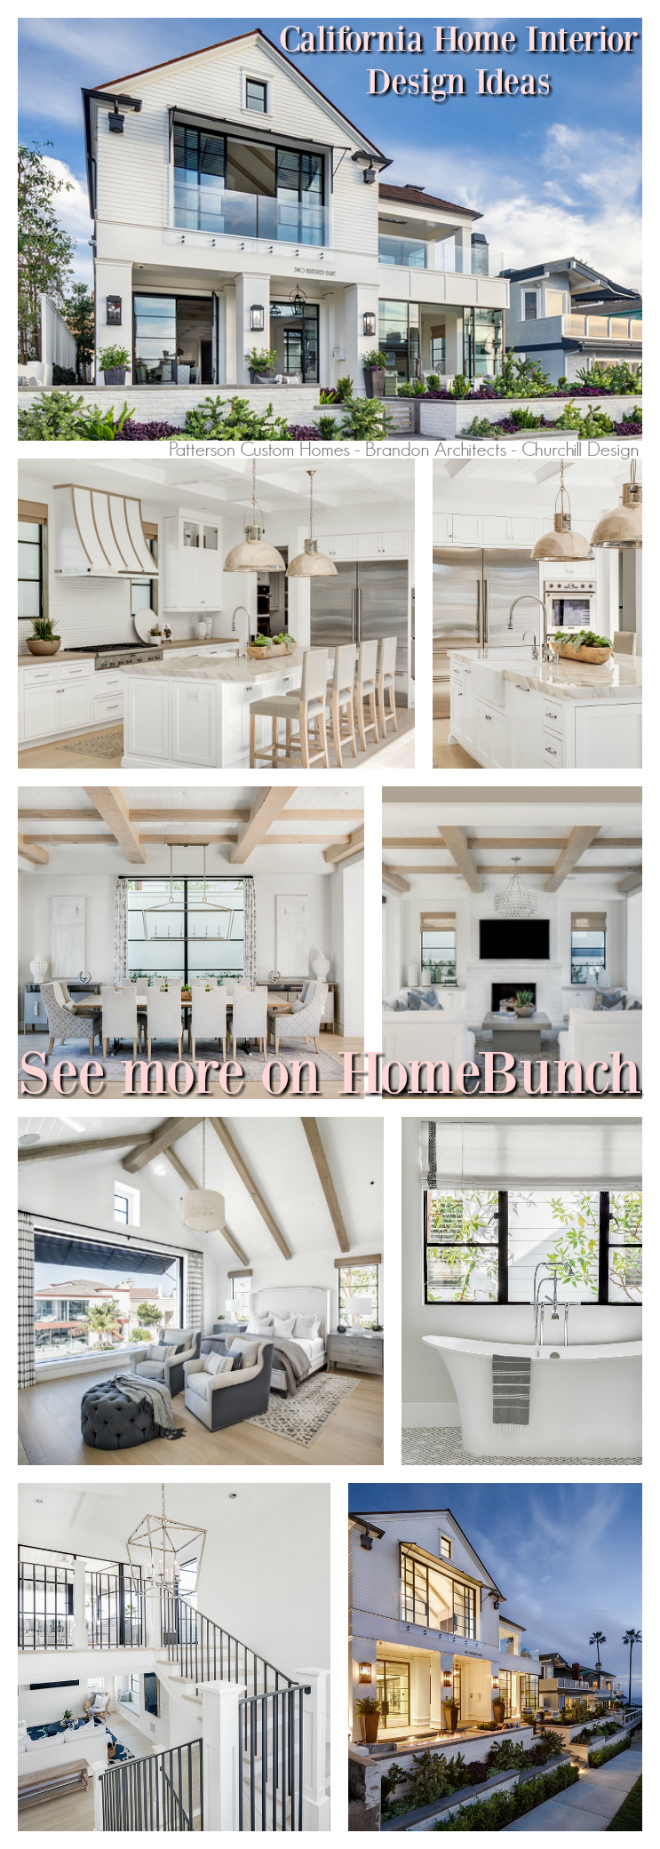 Home Bunch Interior Design Ideas